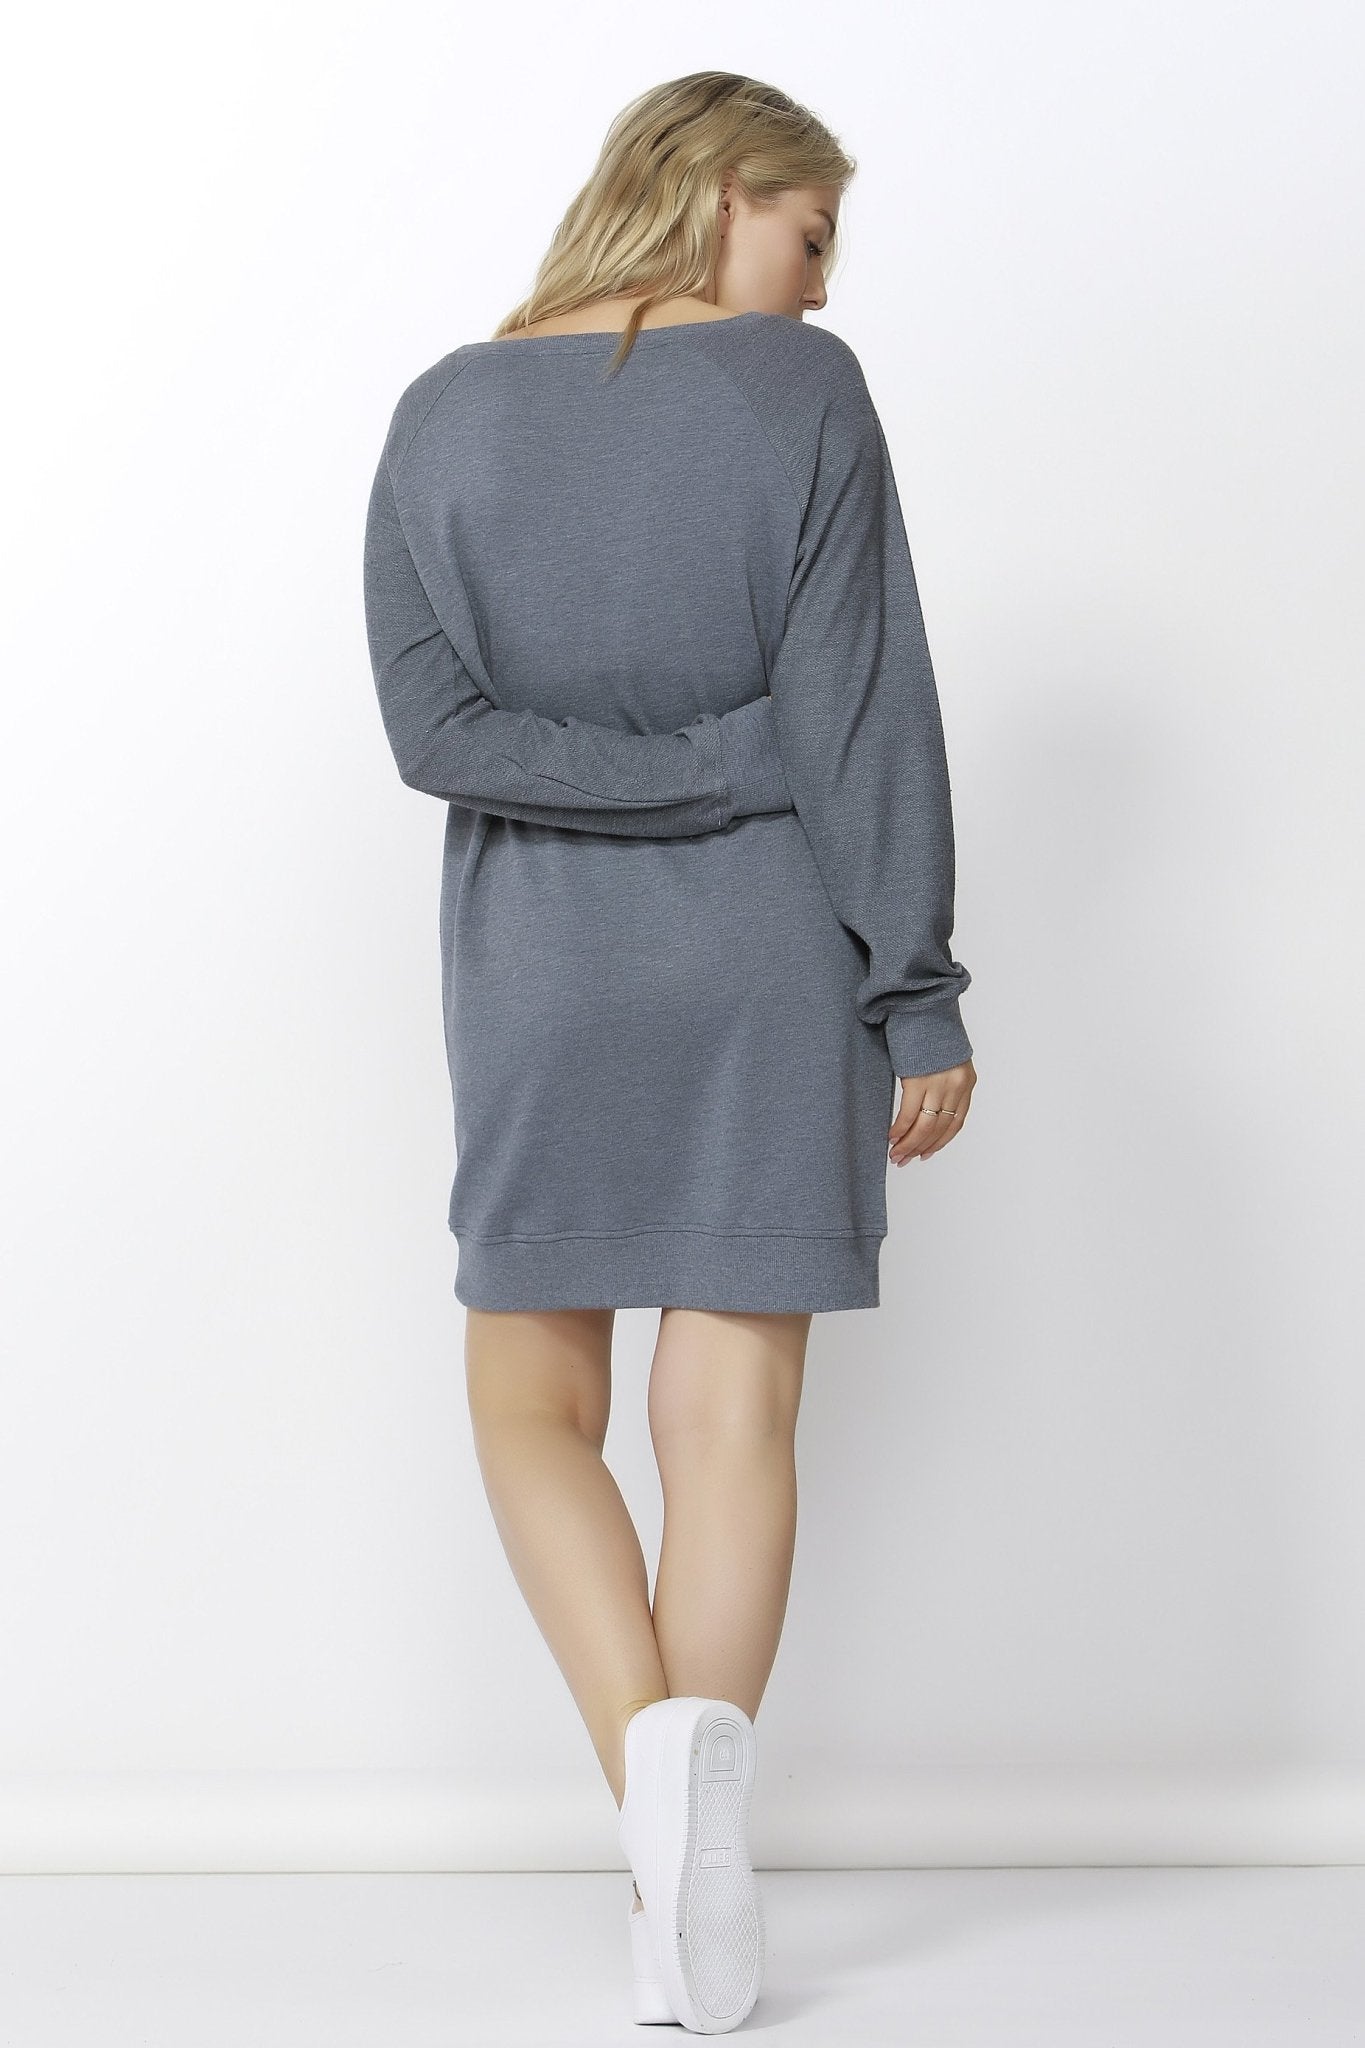 Betty Basics Nico Sweater Dress in Slate Blue Size 6 or 8 Only - Hey Sara